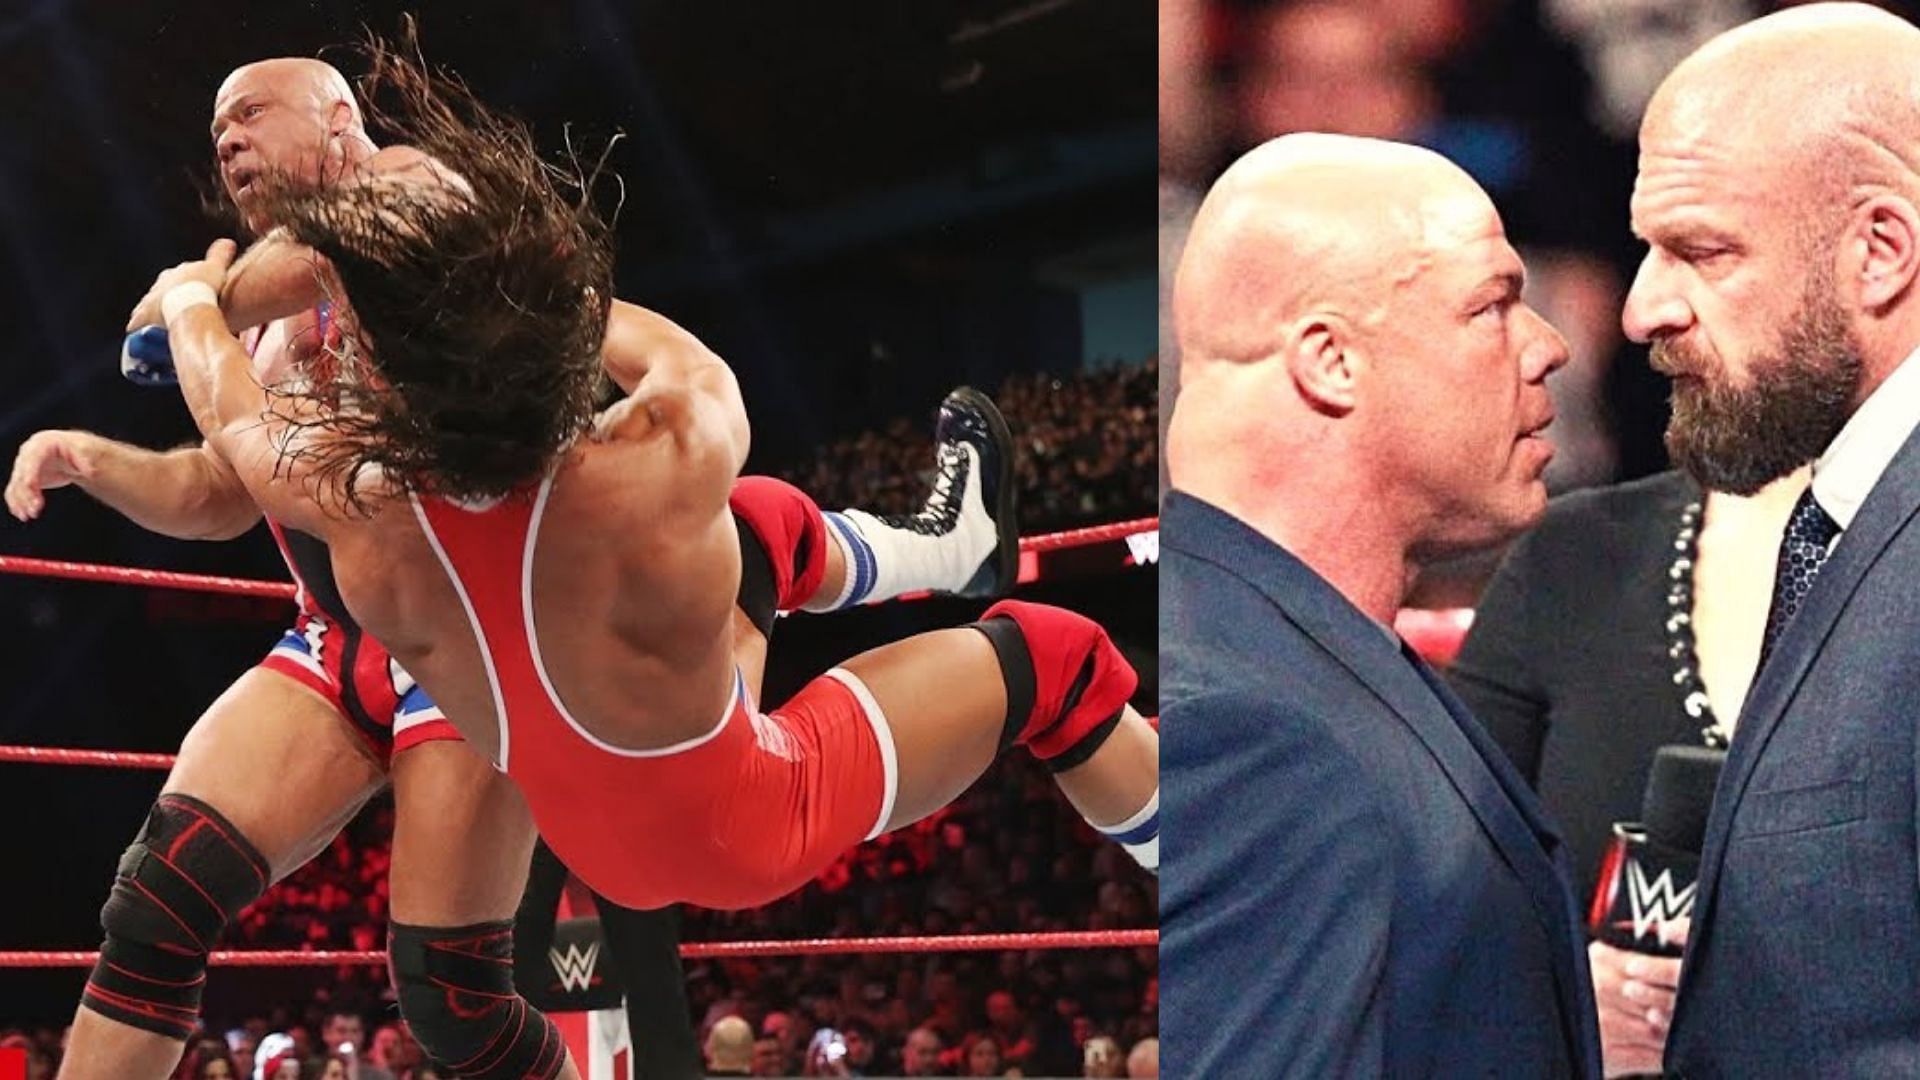 What will happen when Kurt Angle returns on RAW?